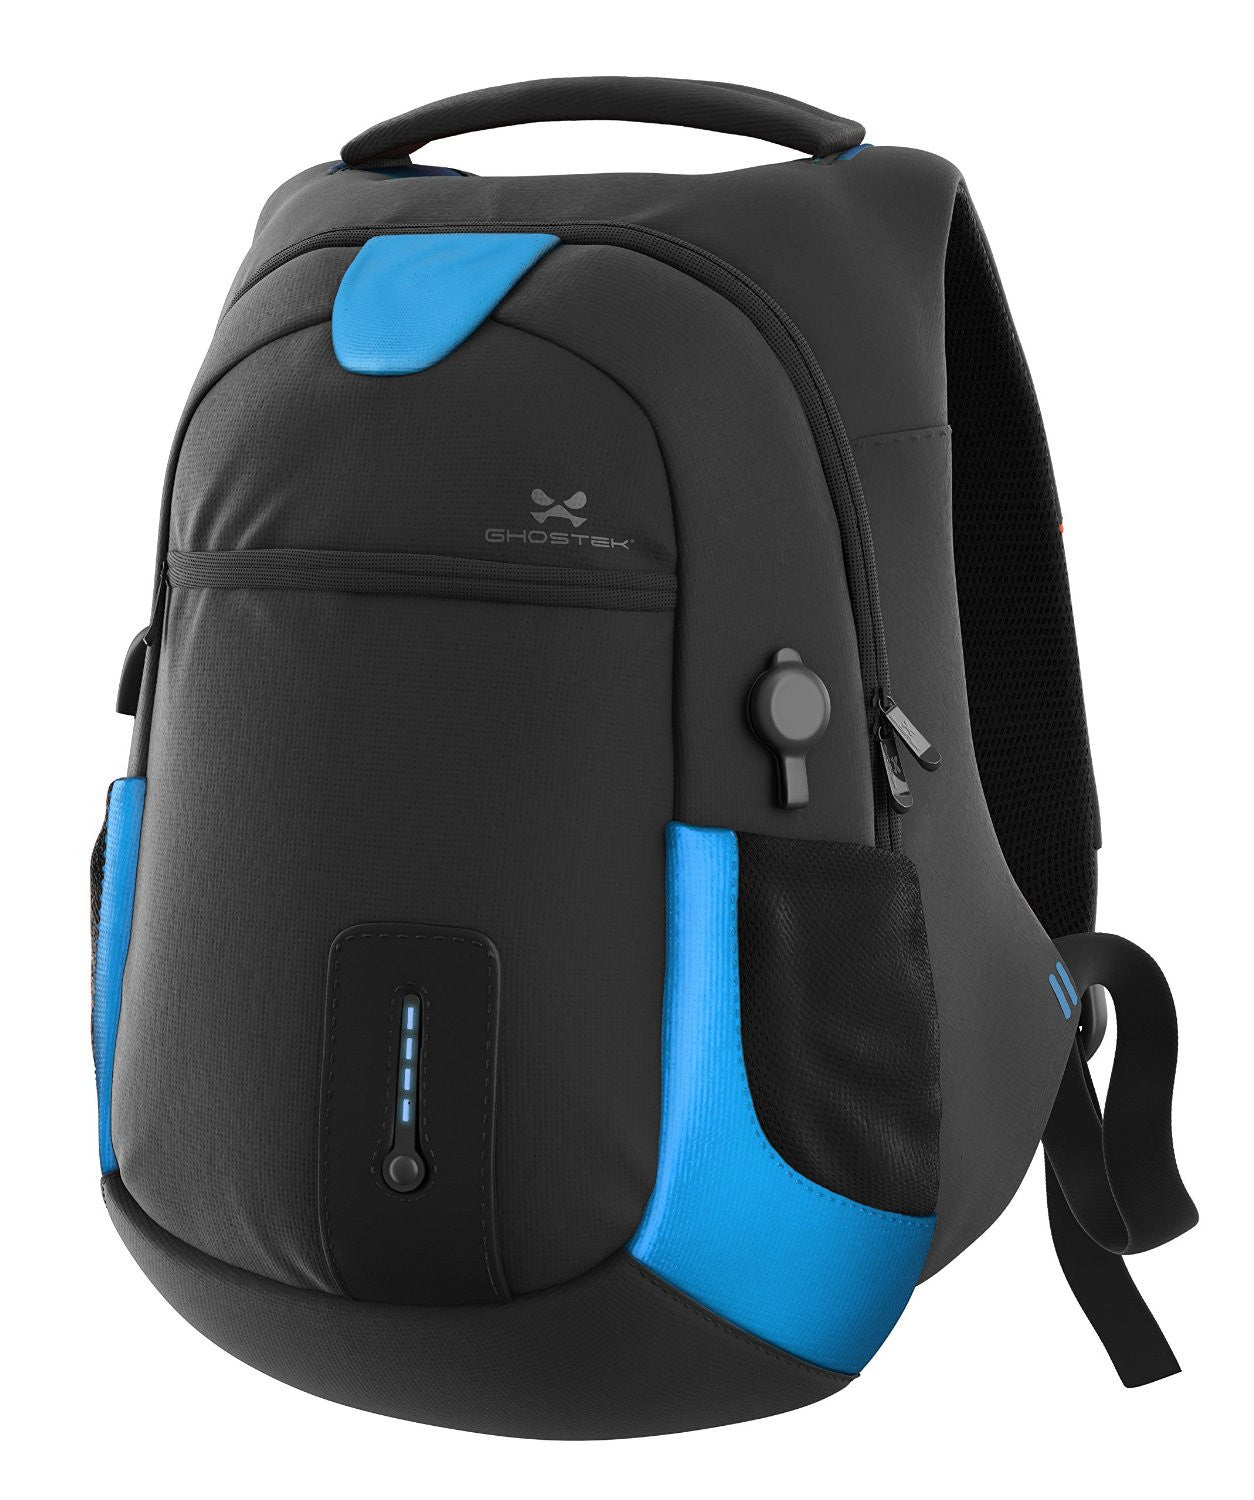 Ghostek NRGbag Blue Series Computer Laptop Messenger Backpack Book Bag + Battery Power Bank | Water Resistant | 7000mAh (Color in image: Blue)